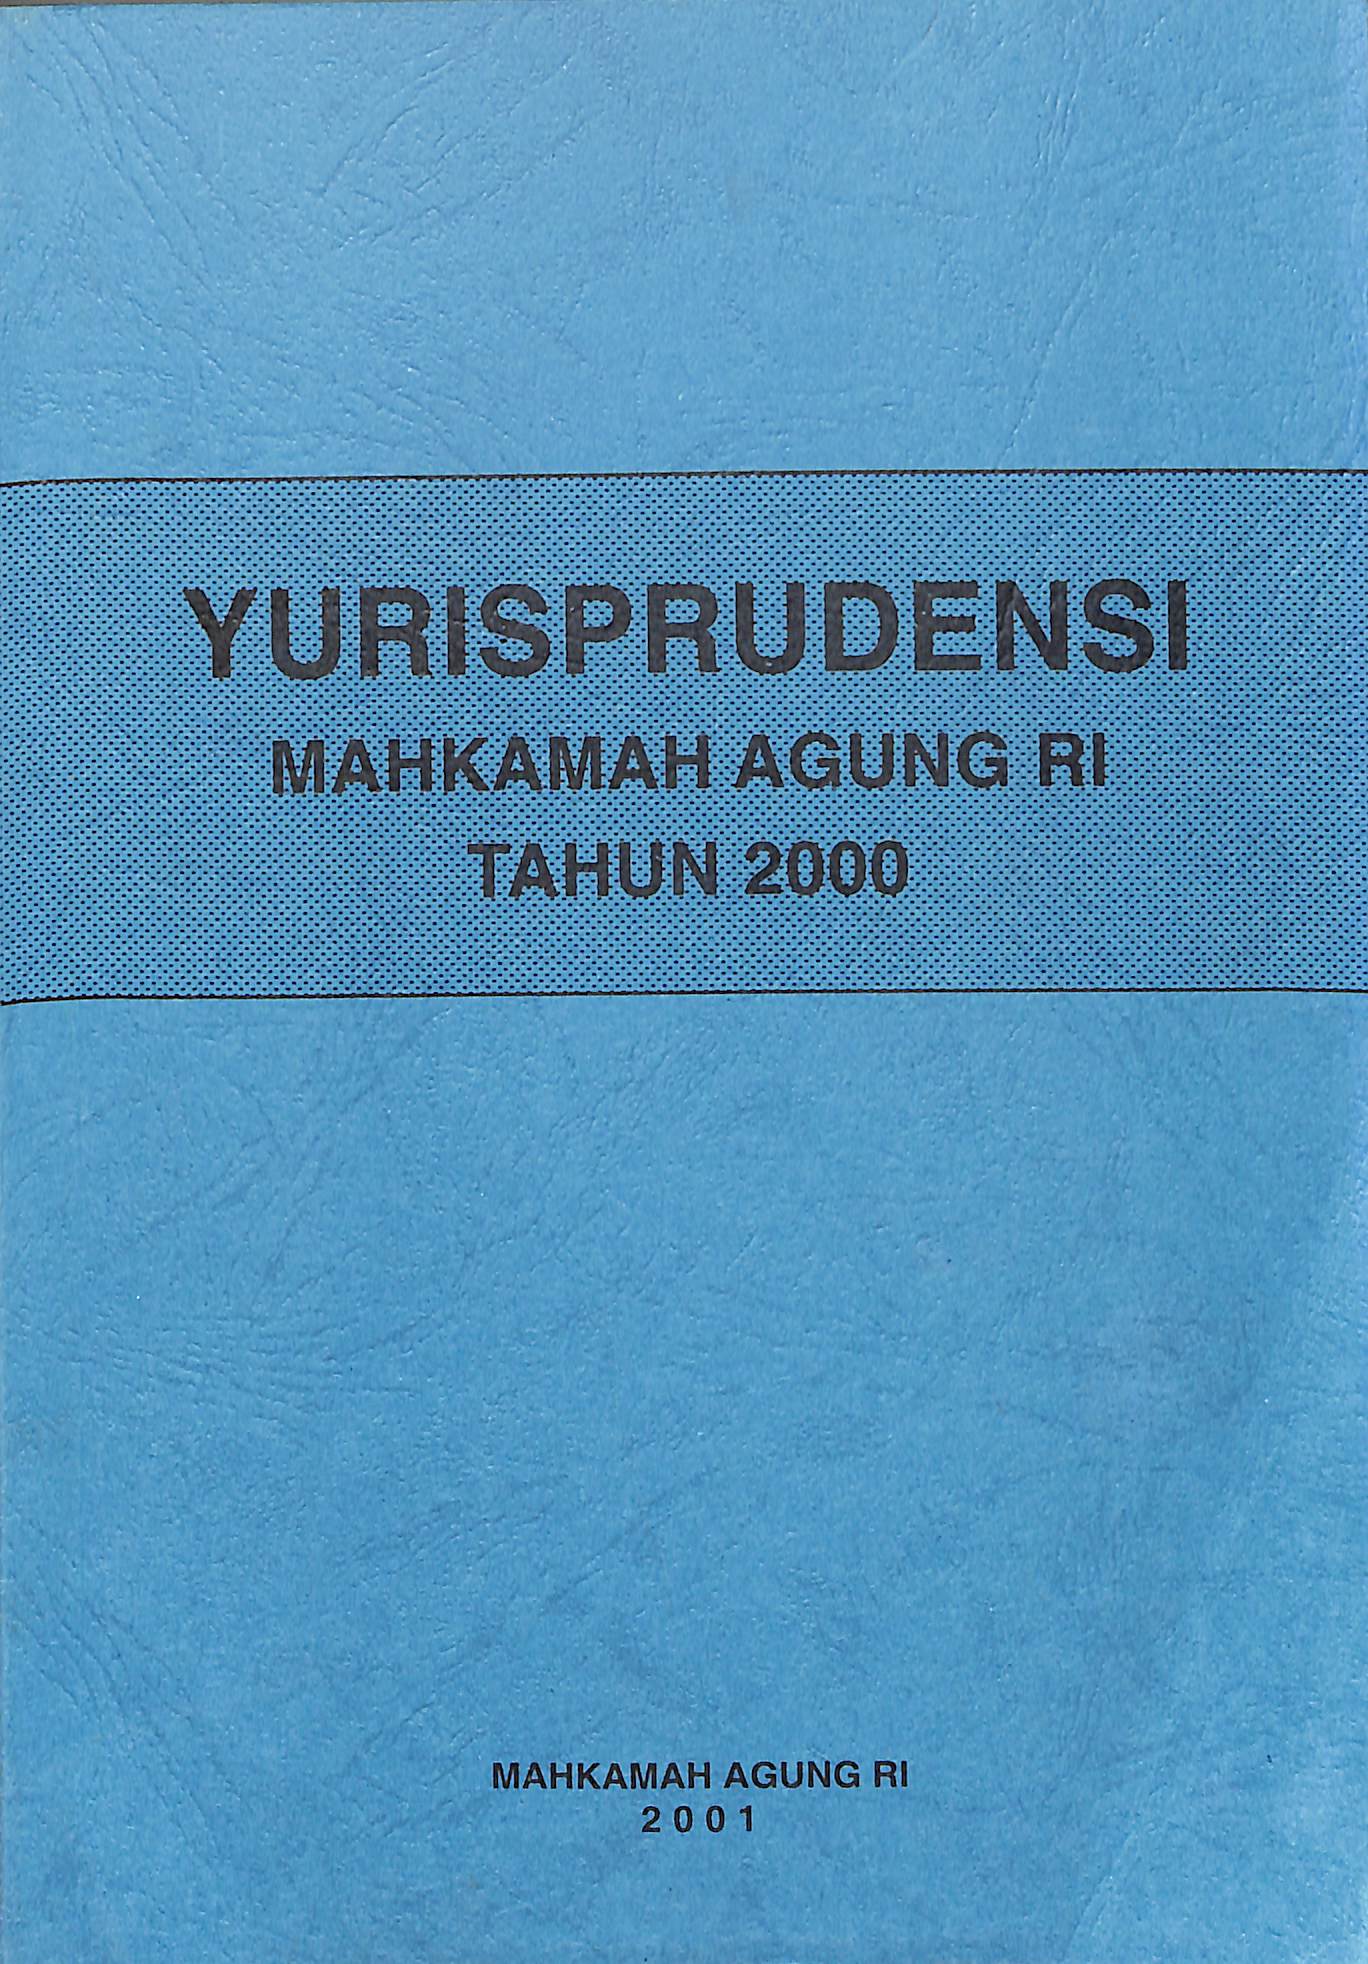 Yurisprudensi Mahkamah Agung RI Tahun 2000